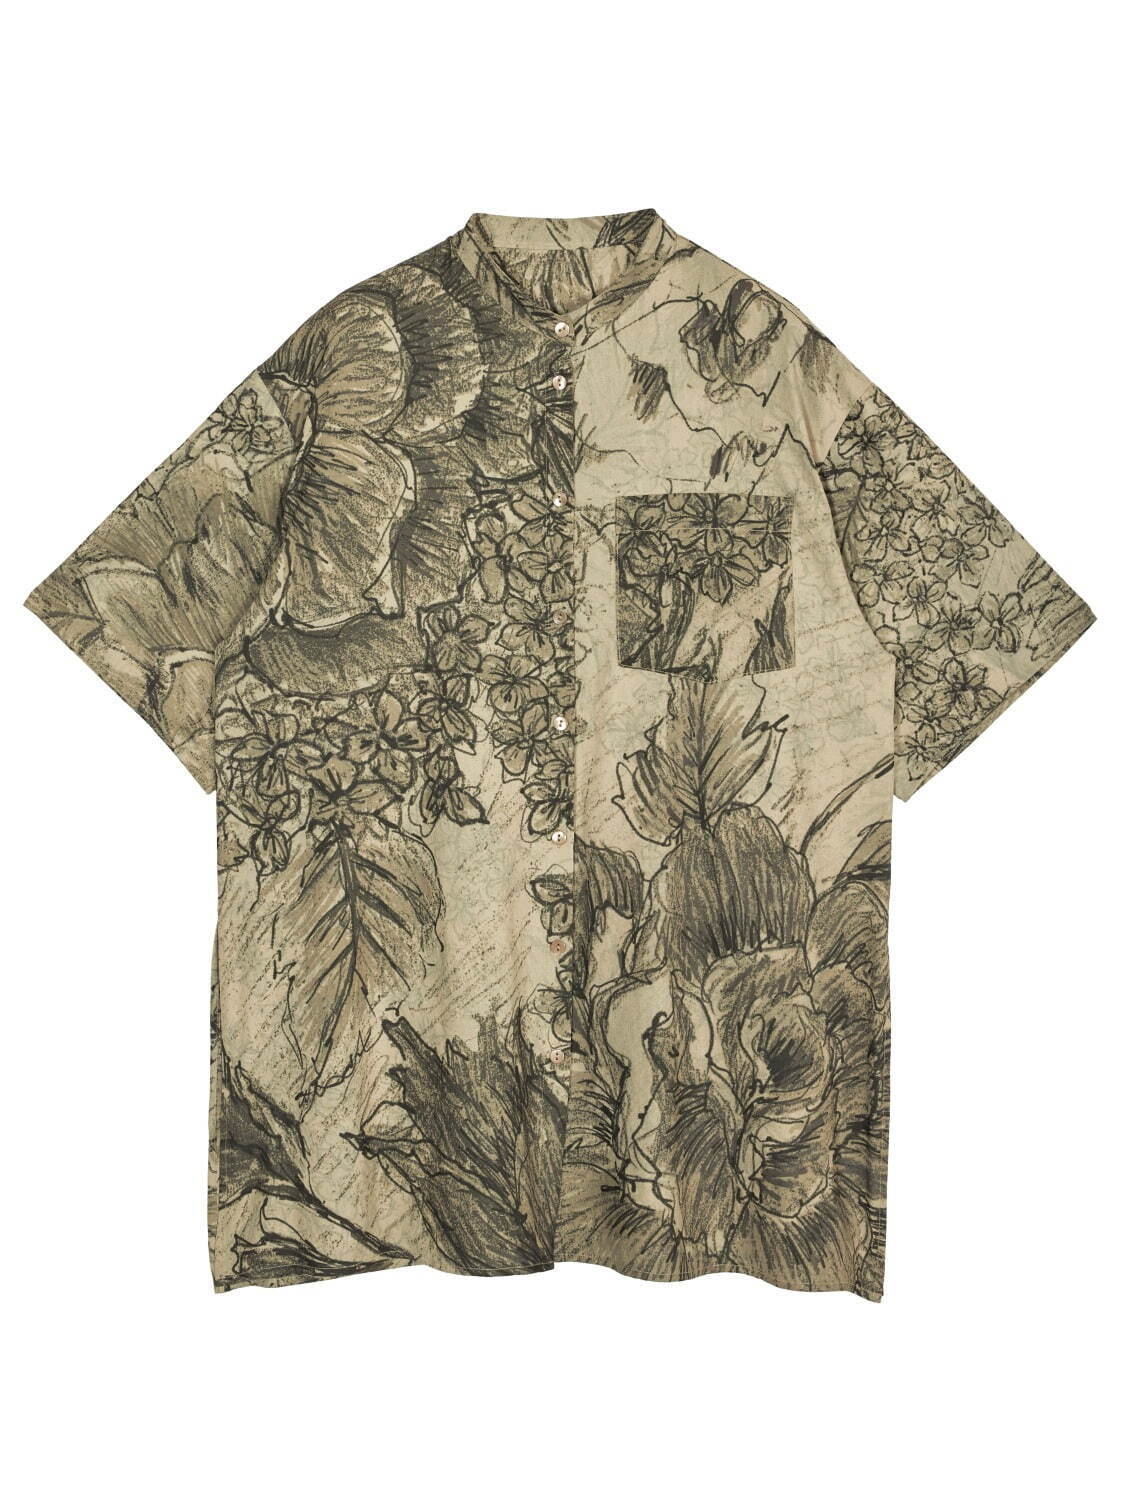 KEITAMARUYAMA × AMERI WIDE SHIRT  シャツ